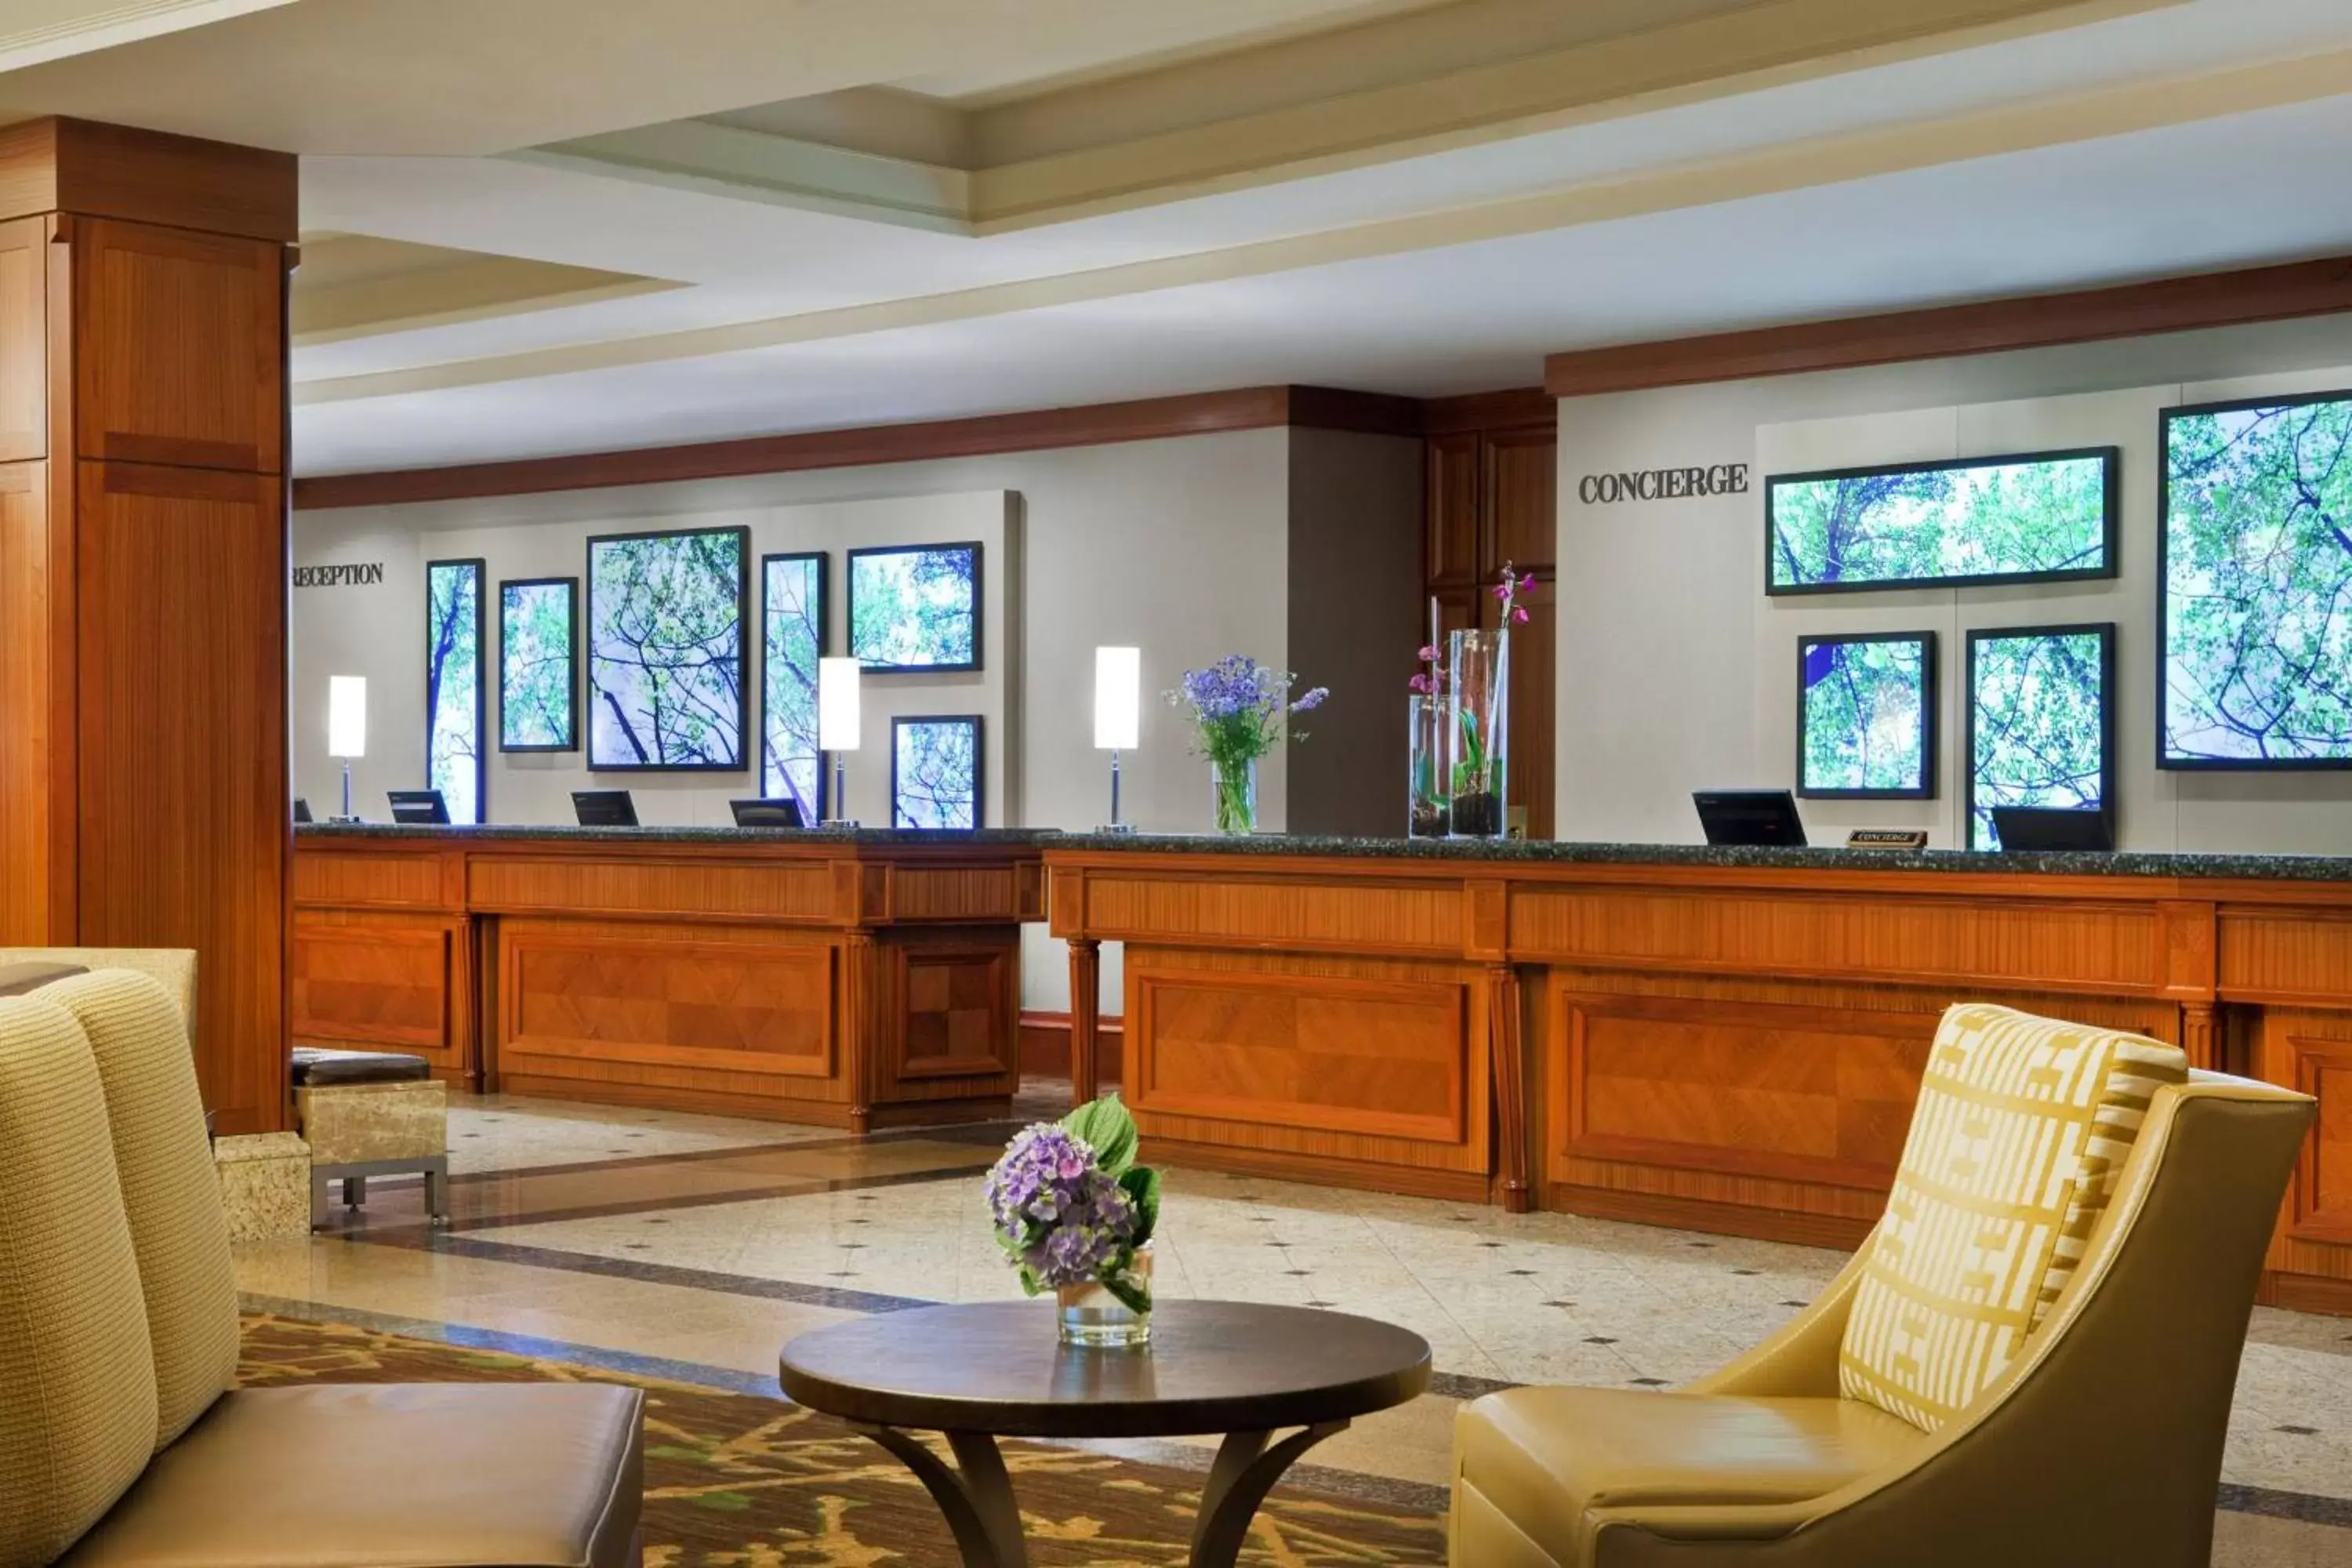 Lobby or reception, Lobby/Reception in Sheraton Boston Hotel